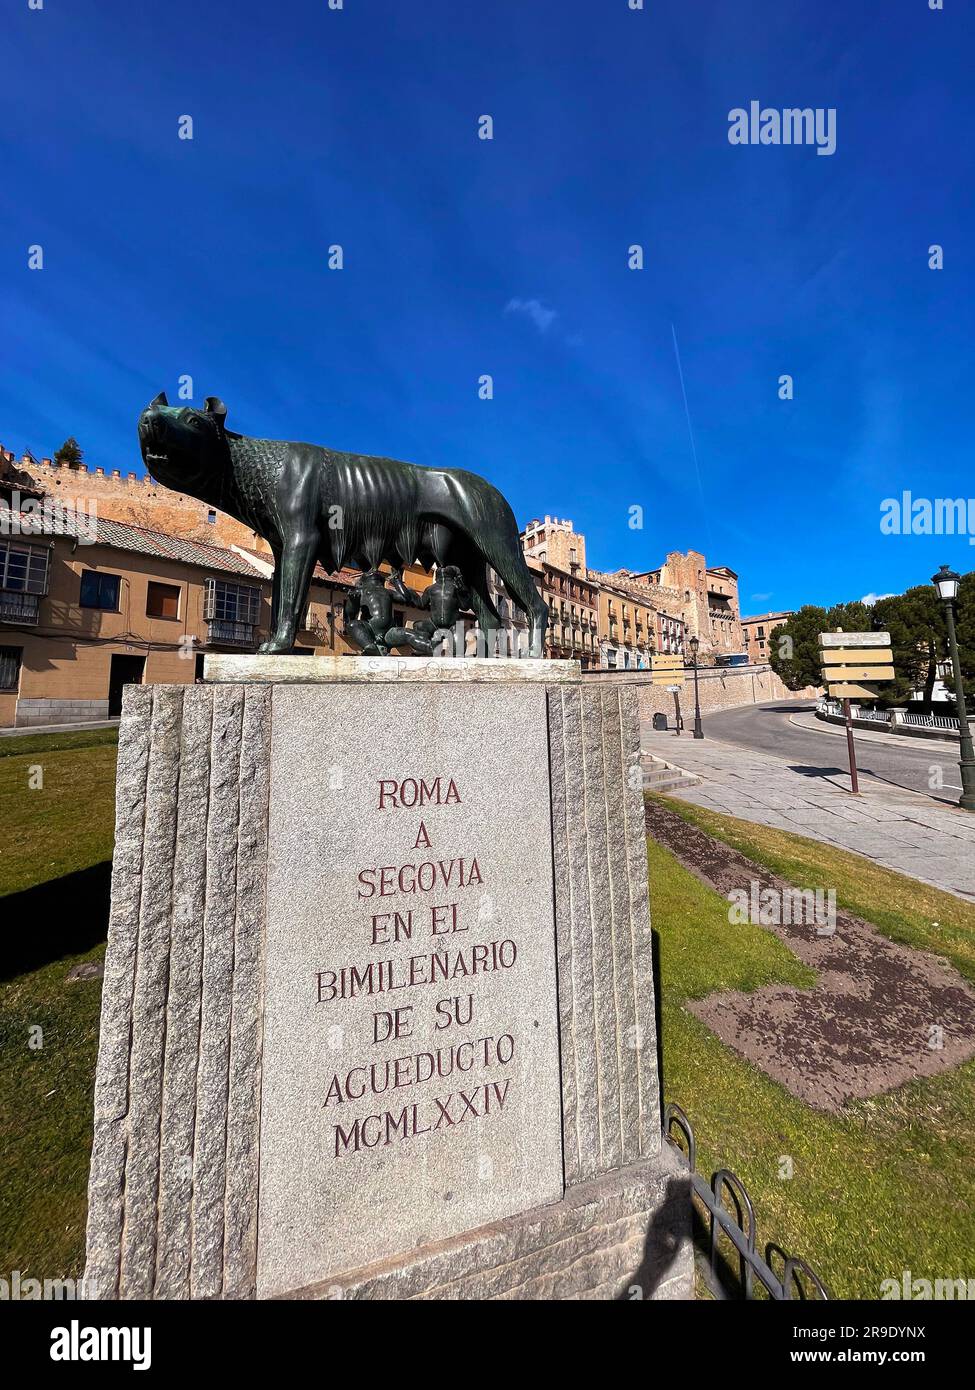 Segovia, Spain-February 18, 2022: The Capitoline Wolf statue under the Roman aqueduct in Segovia. The Statue symbolizes Rome and the Roman Empire. Stock Photo